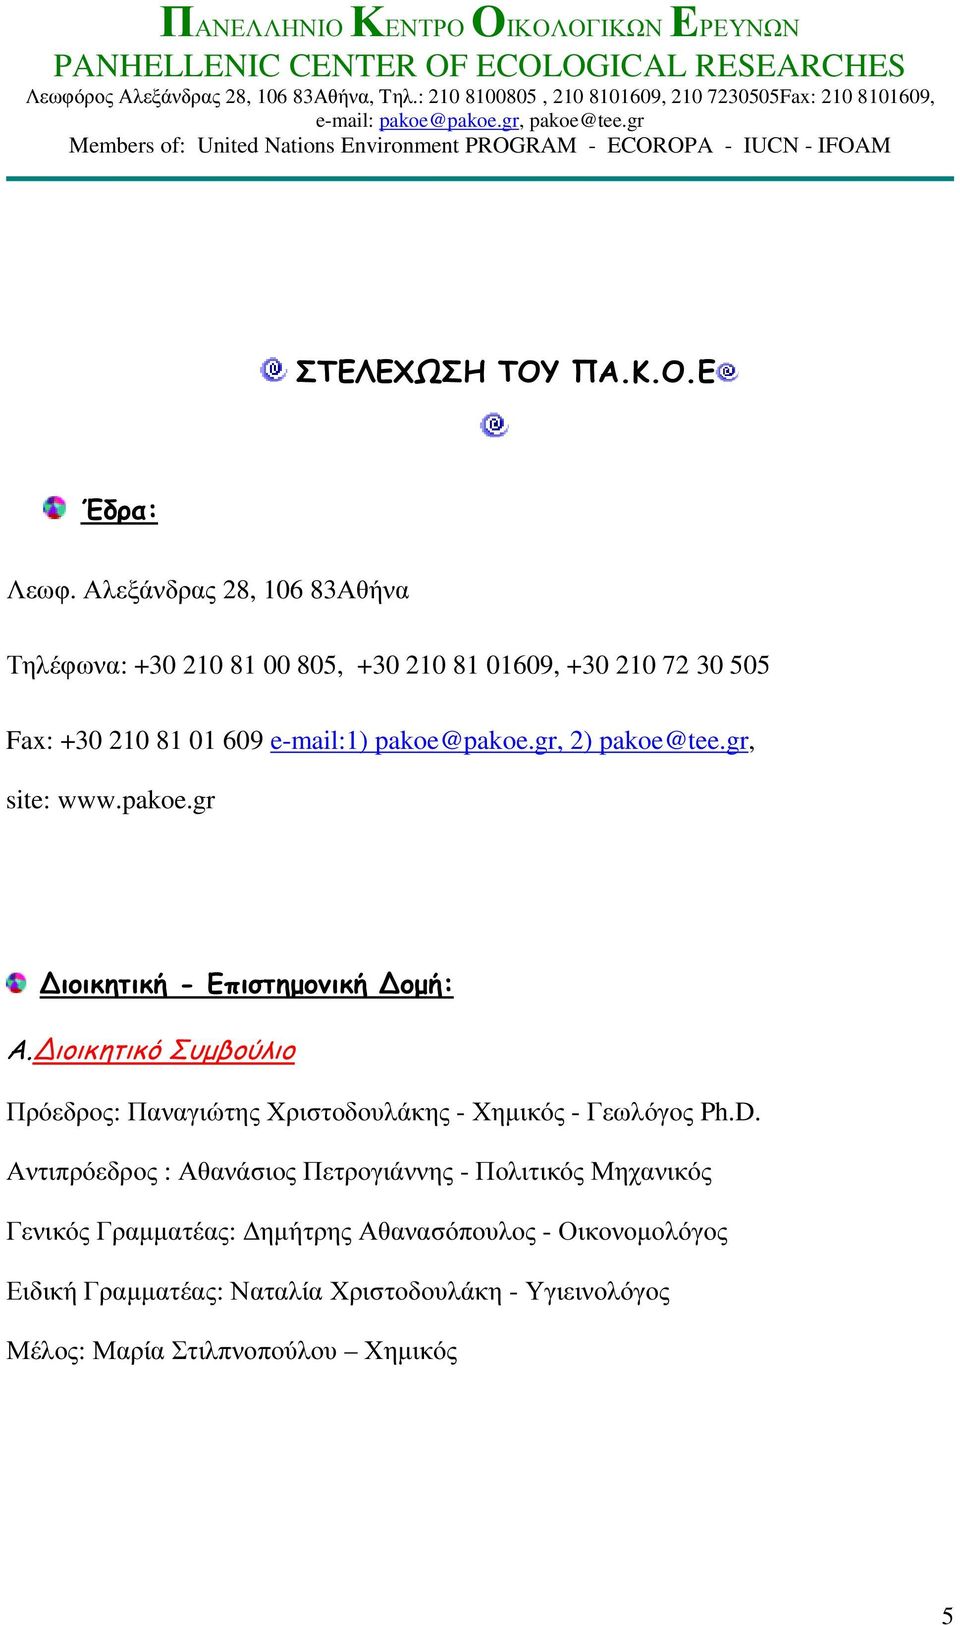 pakoe@pakoe.gr, 2) pakoe@tee.gr, site: www.pakoe.gr ιοικητική - Επιστηµονική οµή: Α.